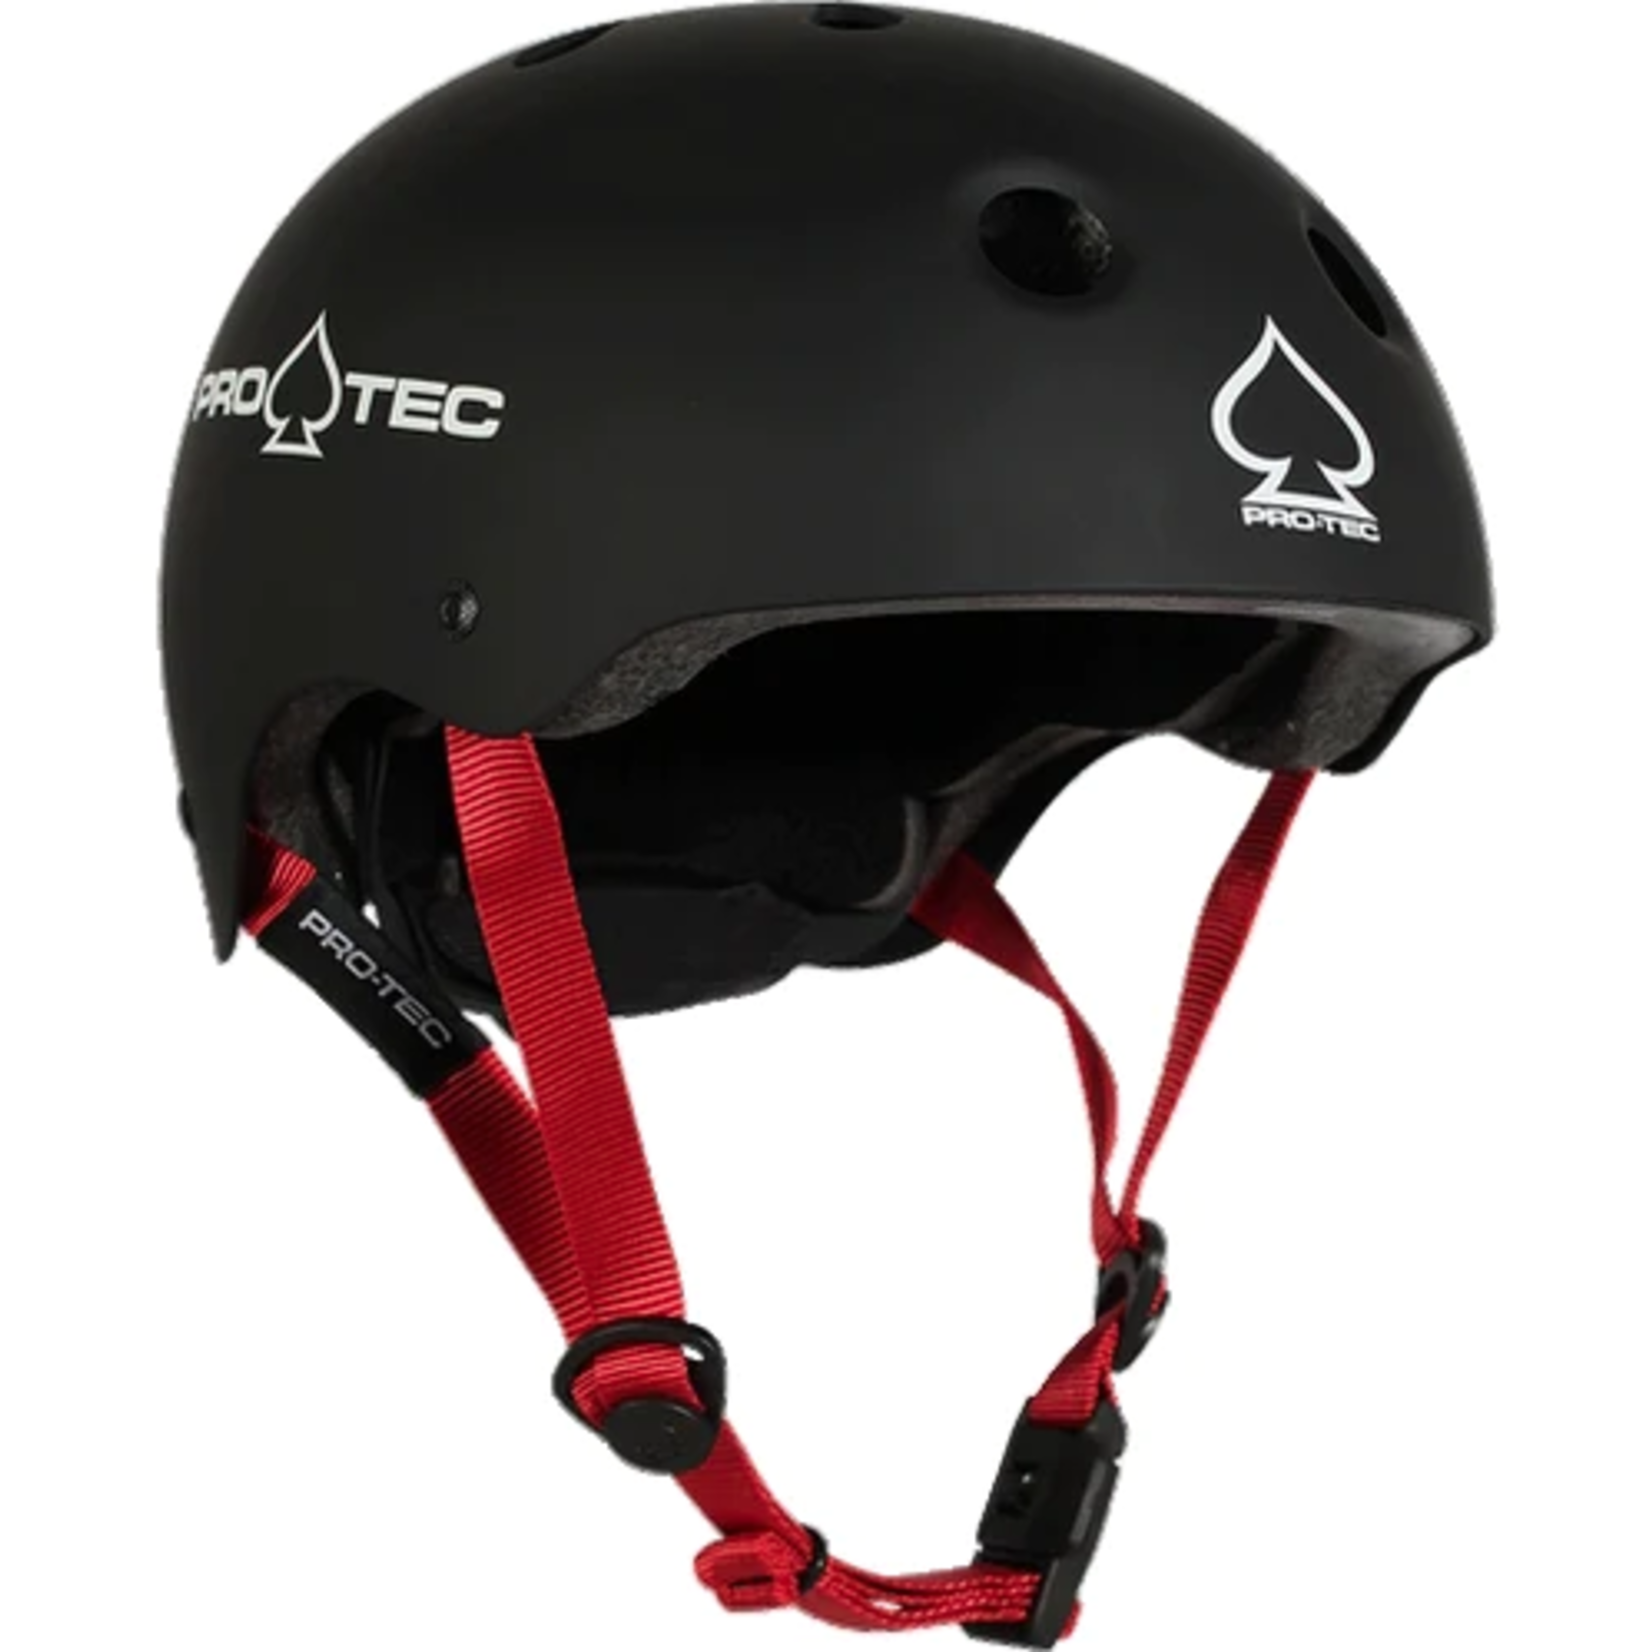 Pro-Tec Pro-Tec Jr Classic Certified Helmet - Matte Black